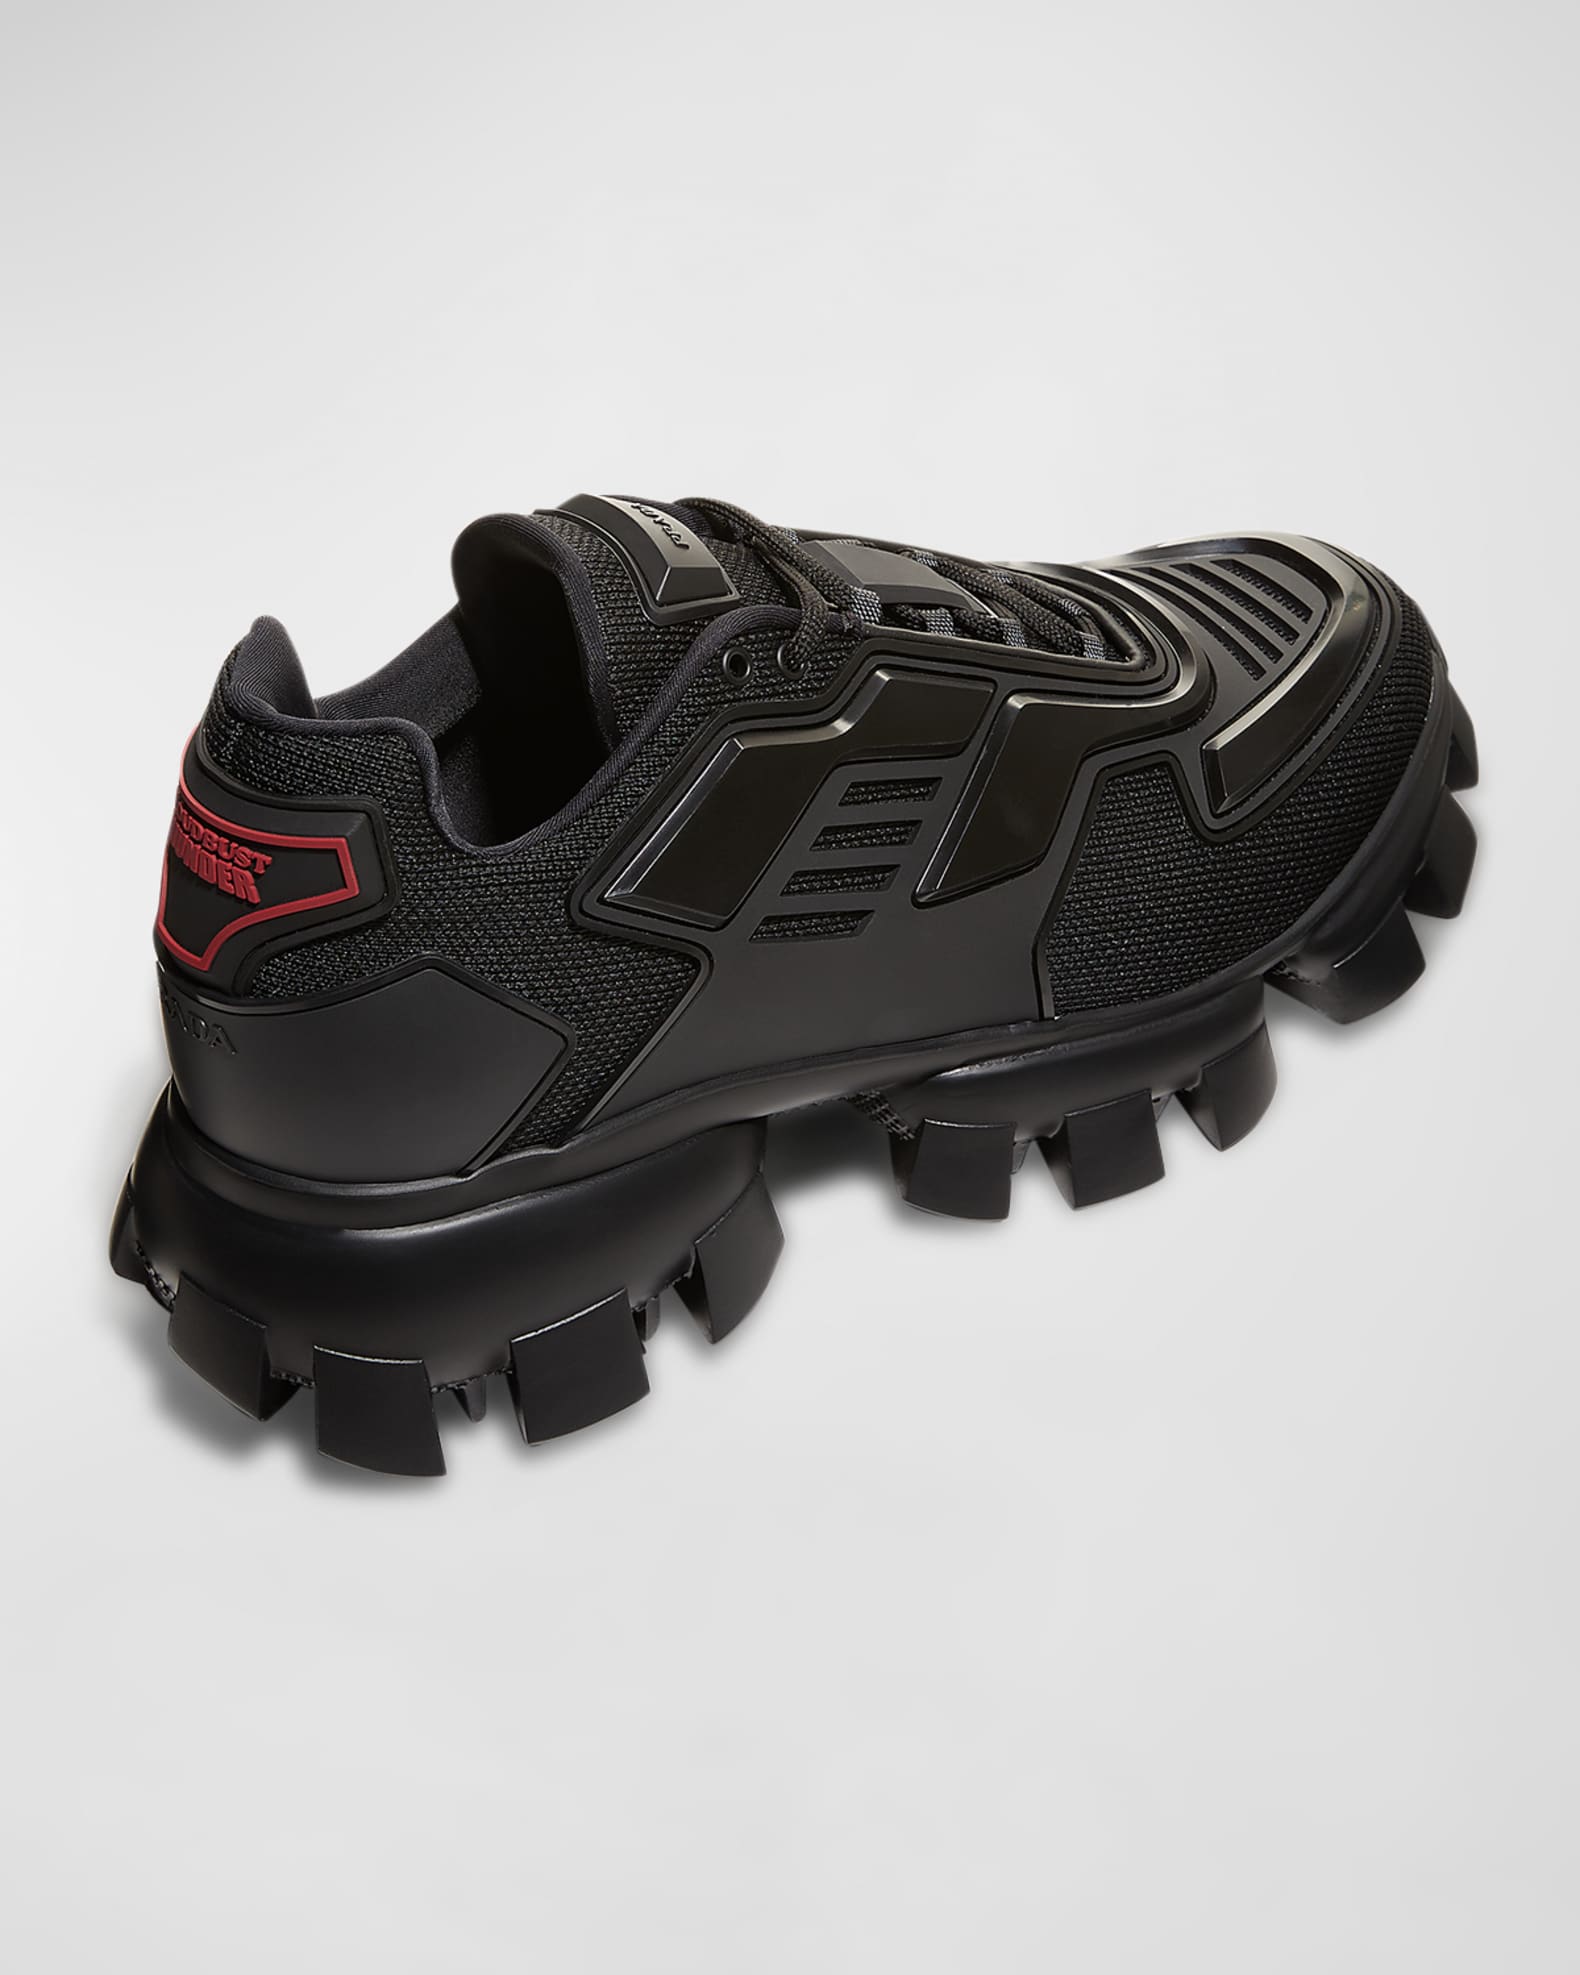 Prada Men's Cloudbust Thunder High-Tech Sneakers